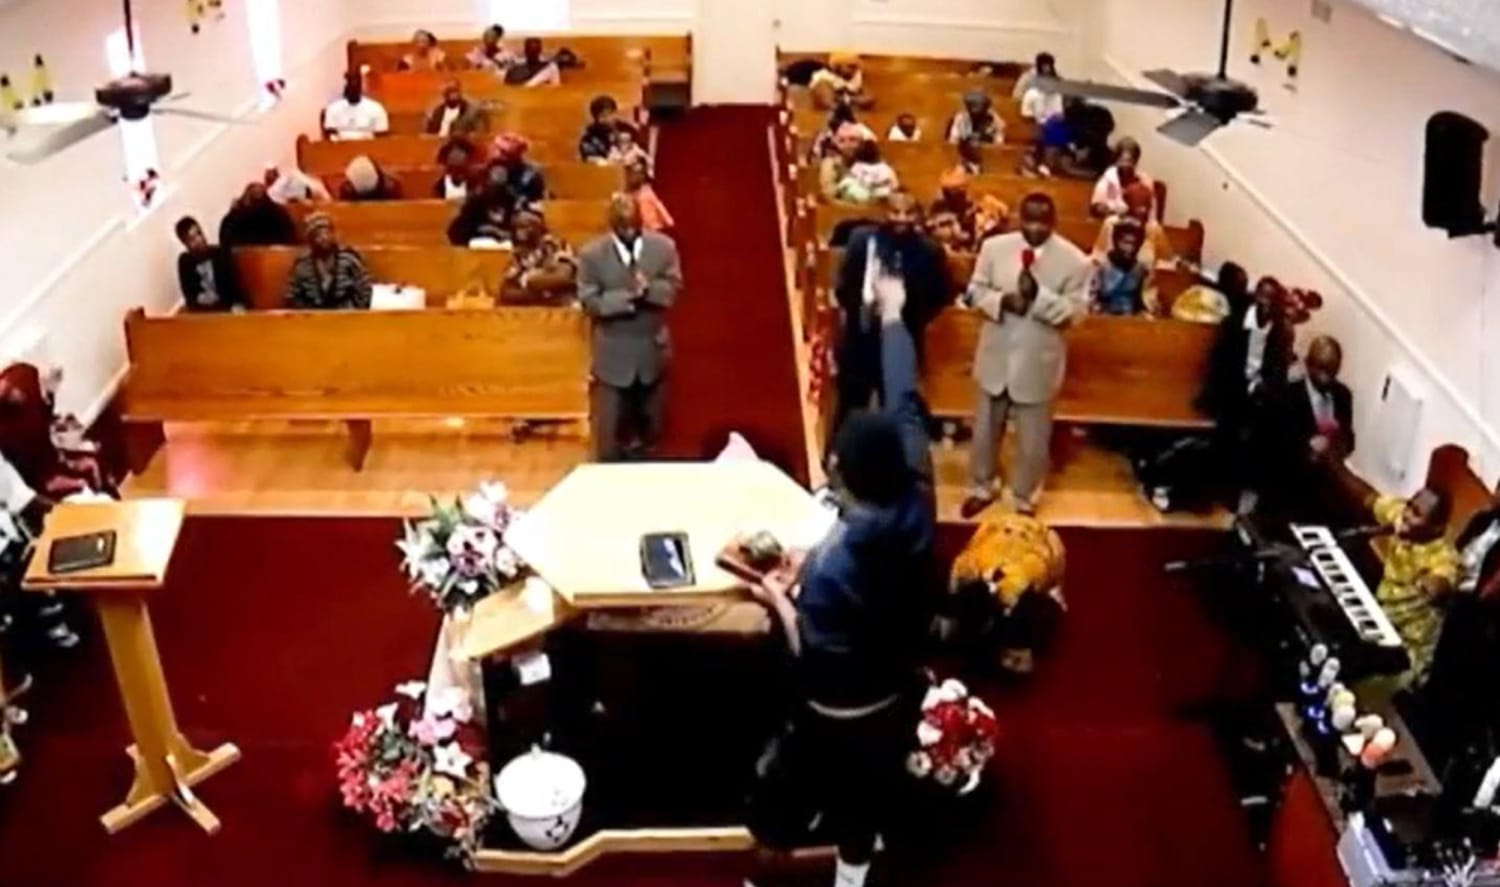 Pastor tackles, disarms gunman during church service